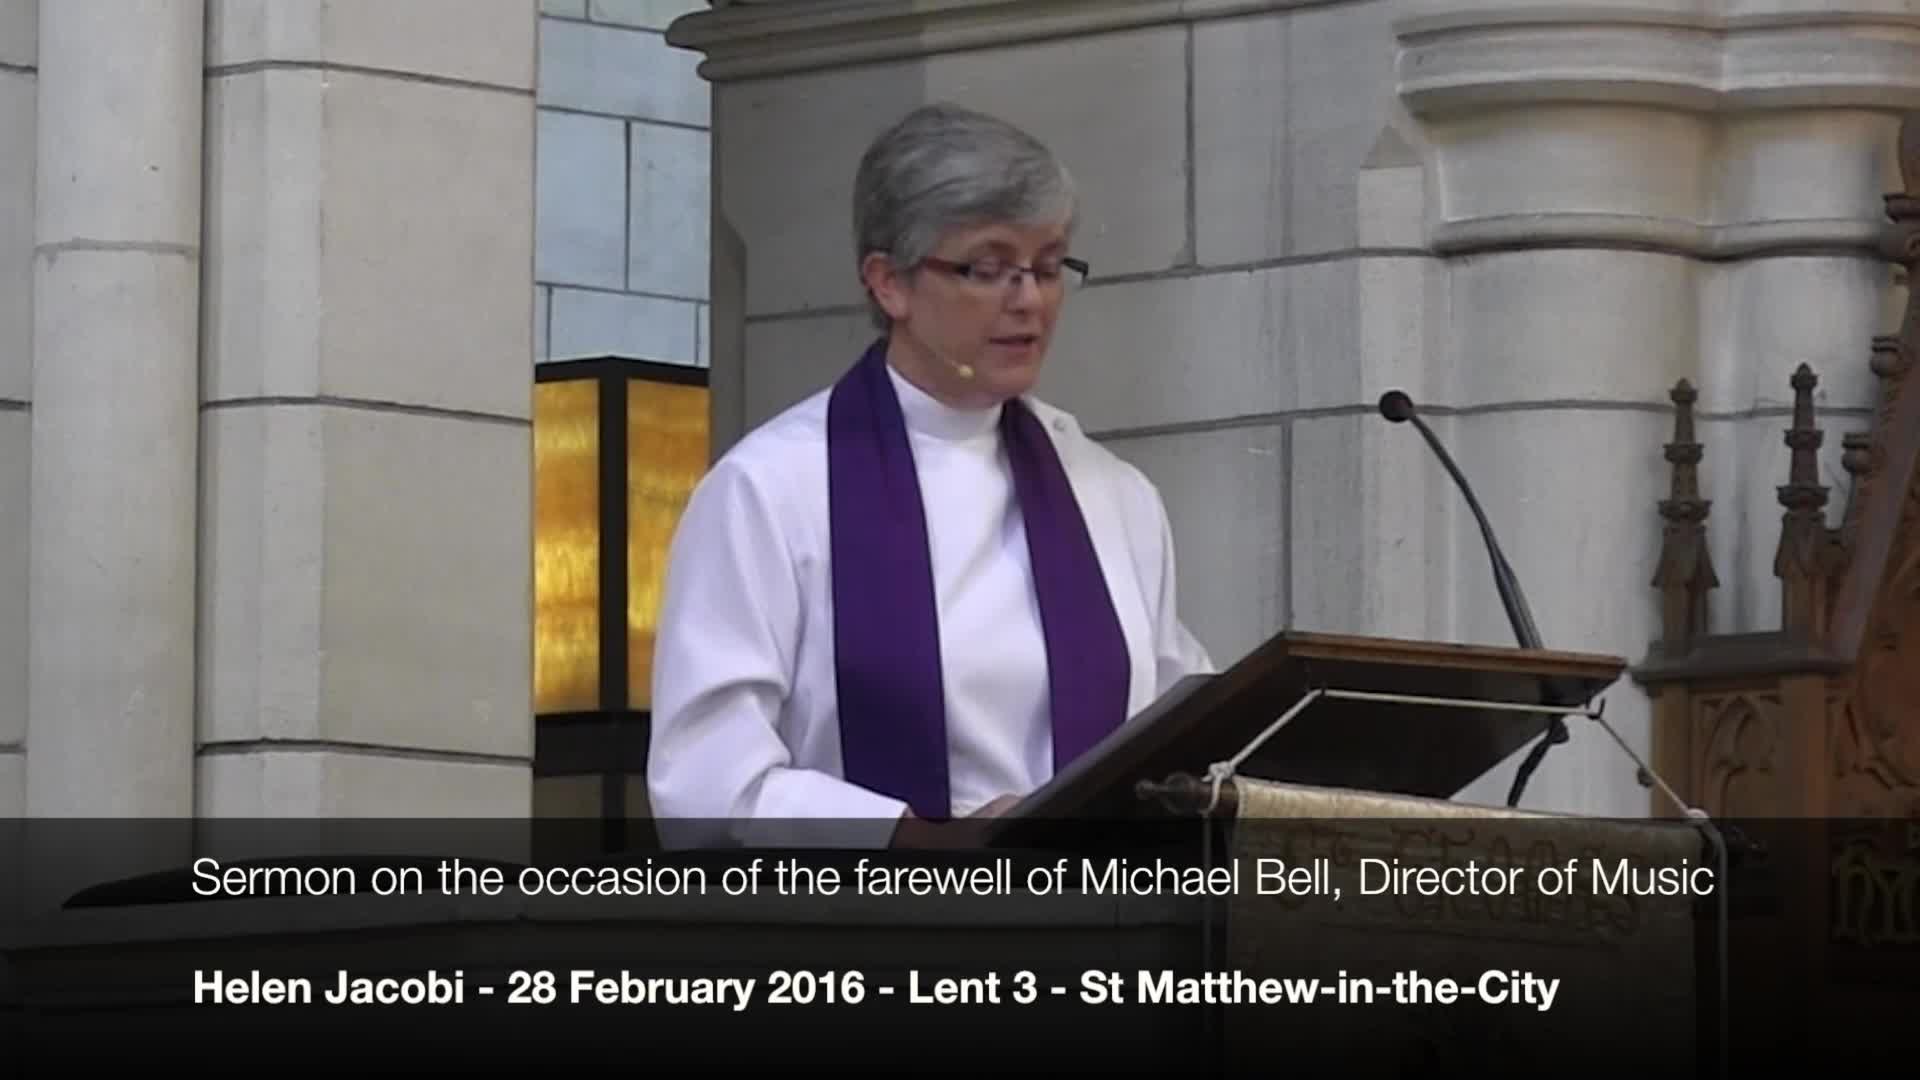 Farewell sermon for Michael Bell